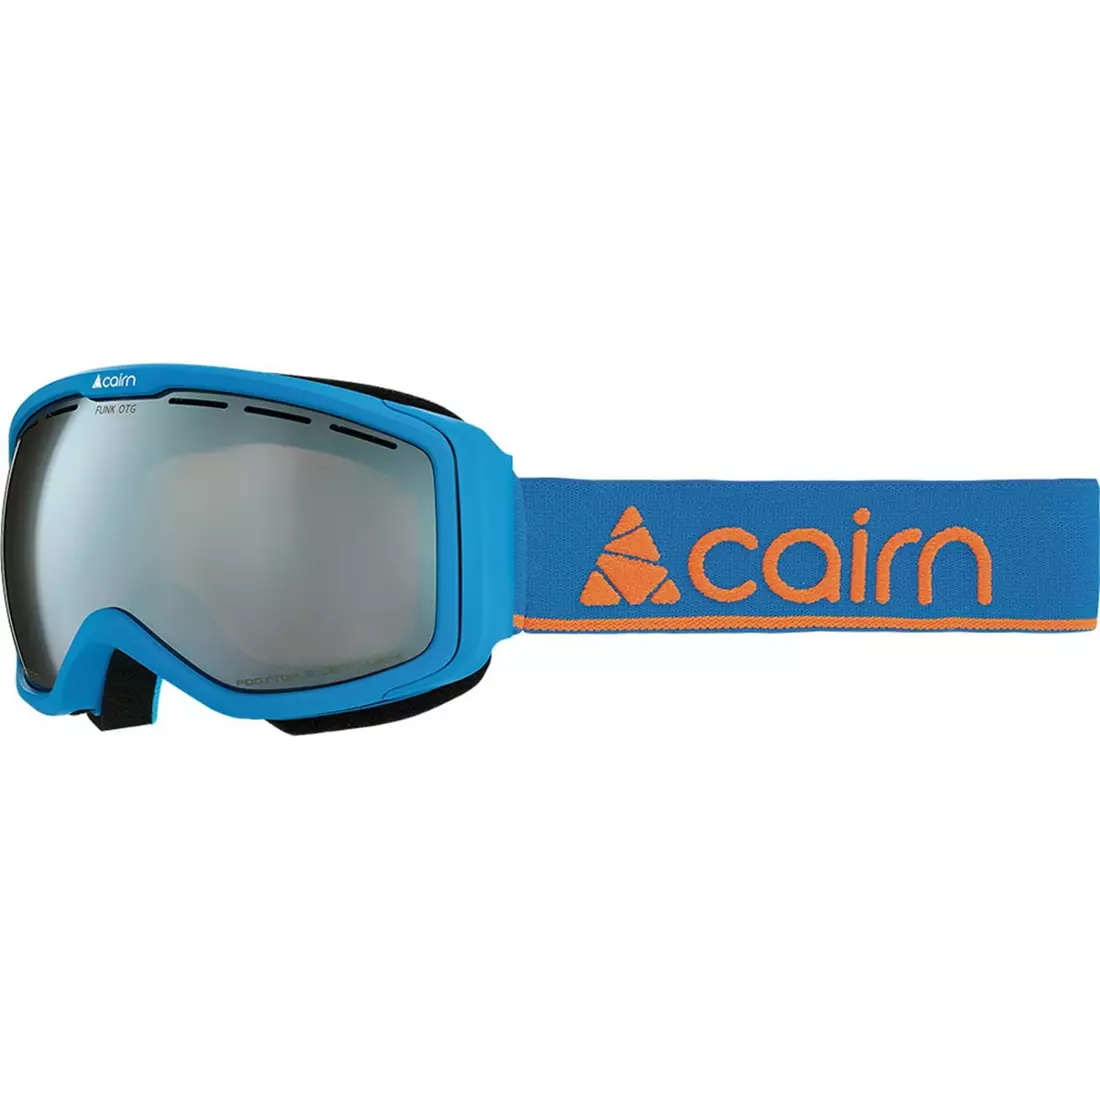 CAIRN junior ski / snowboard goggles FUNK OTG SPX3000 blue mat orange